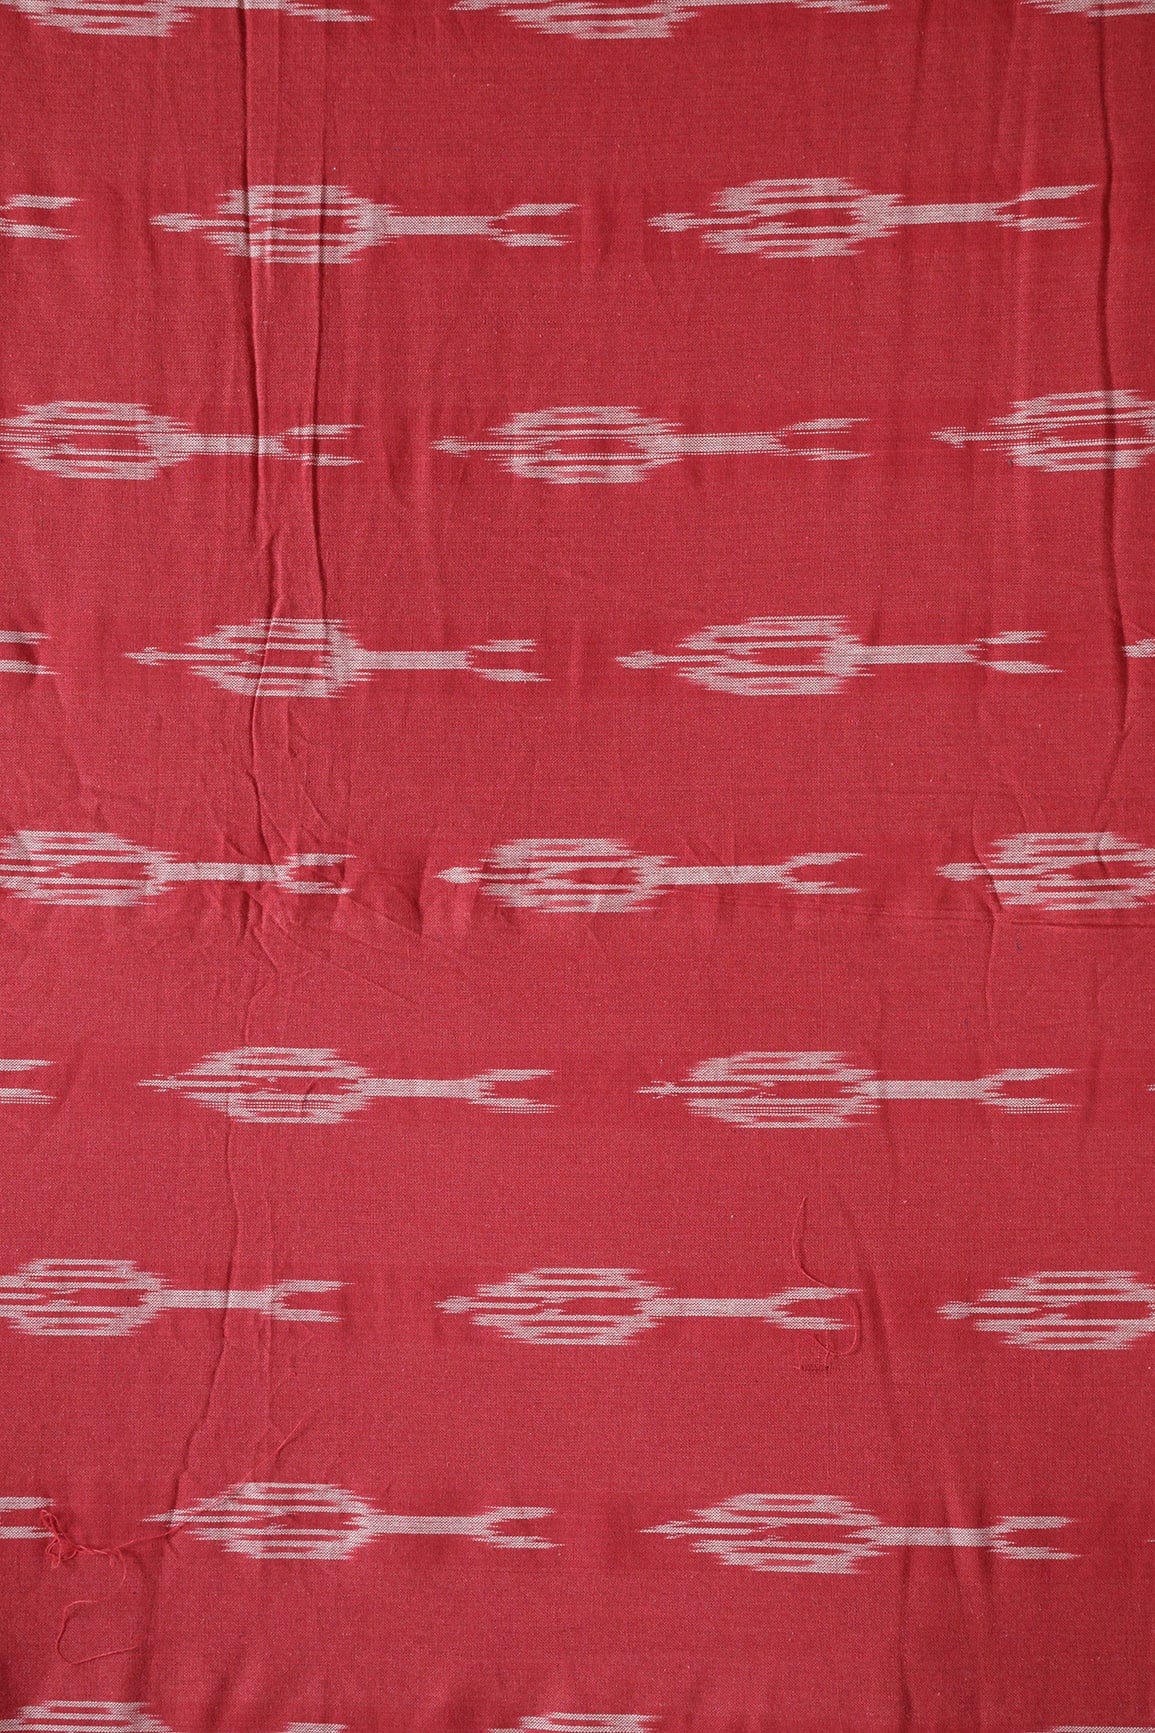 doeraa Hand Woven Red And White Geometric Pattern Handwoven Ikat Organic Cotton Fabric